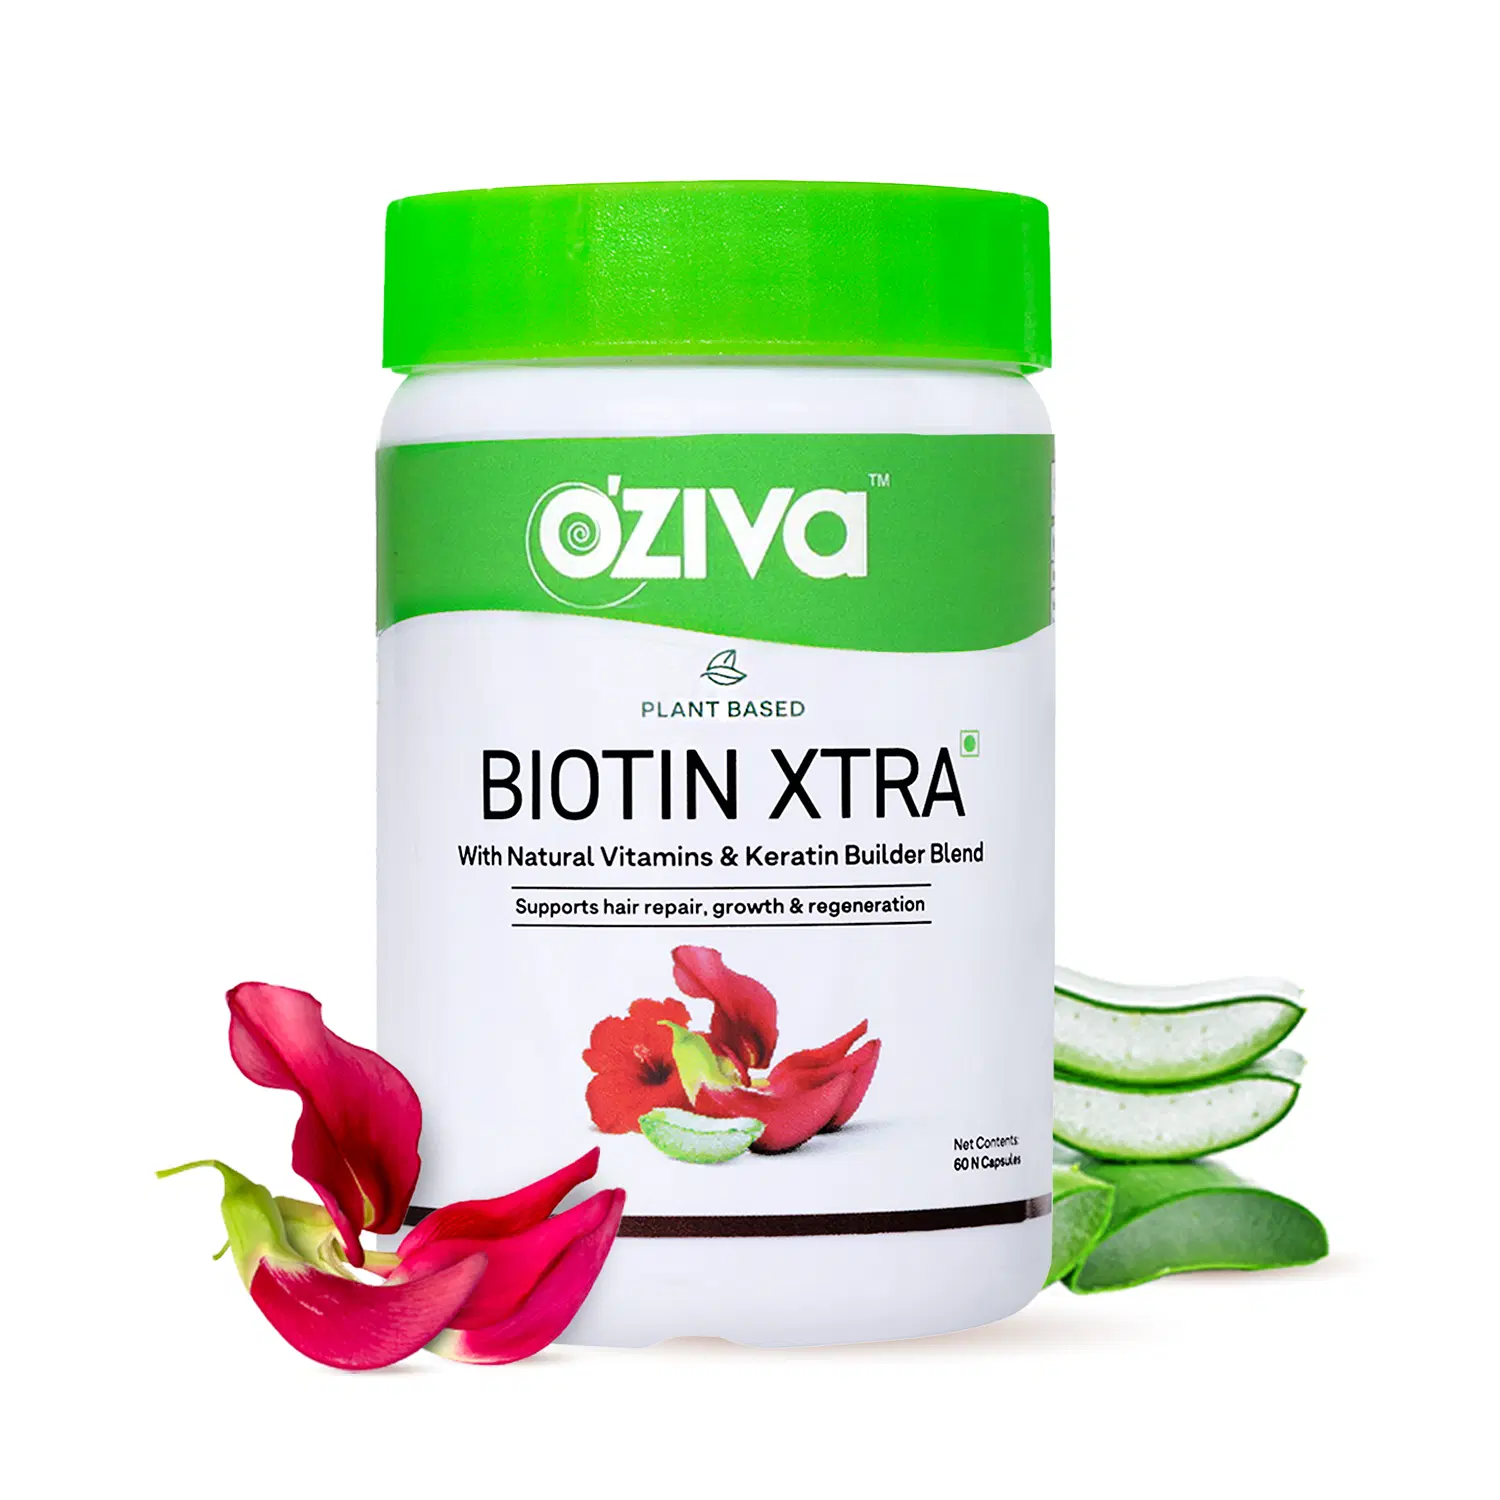 Oziva Plant-Based Biotin Xtra with Natural Vitamin & Keratin Builder Blend Capsule